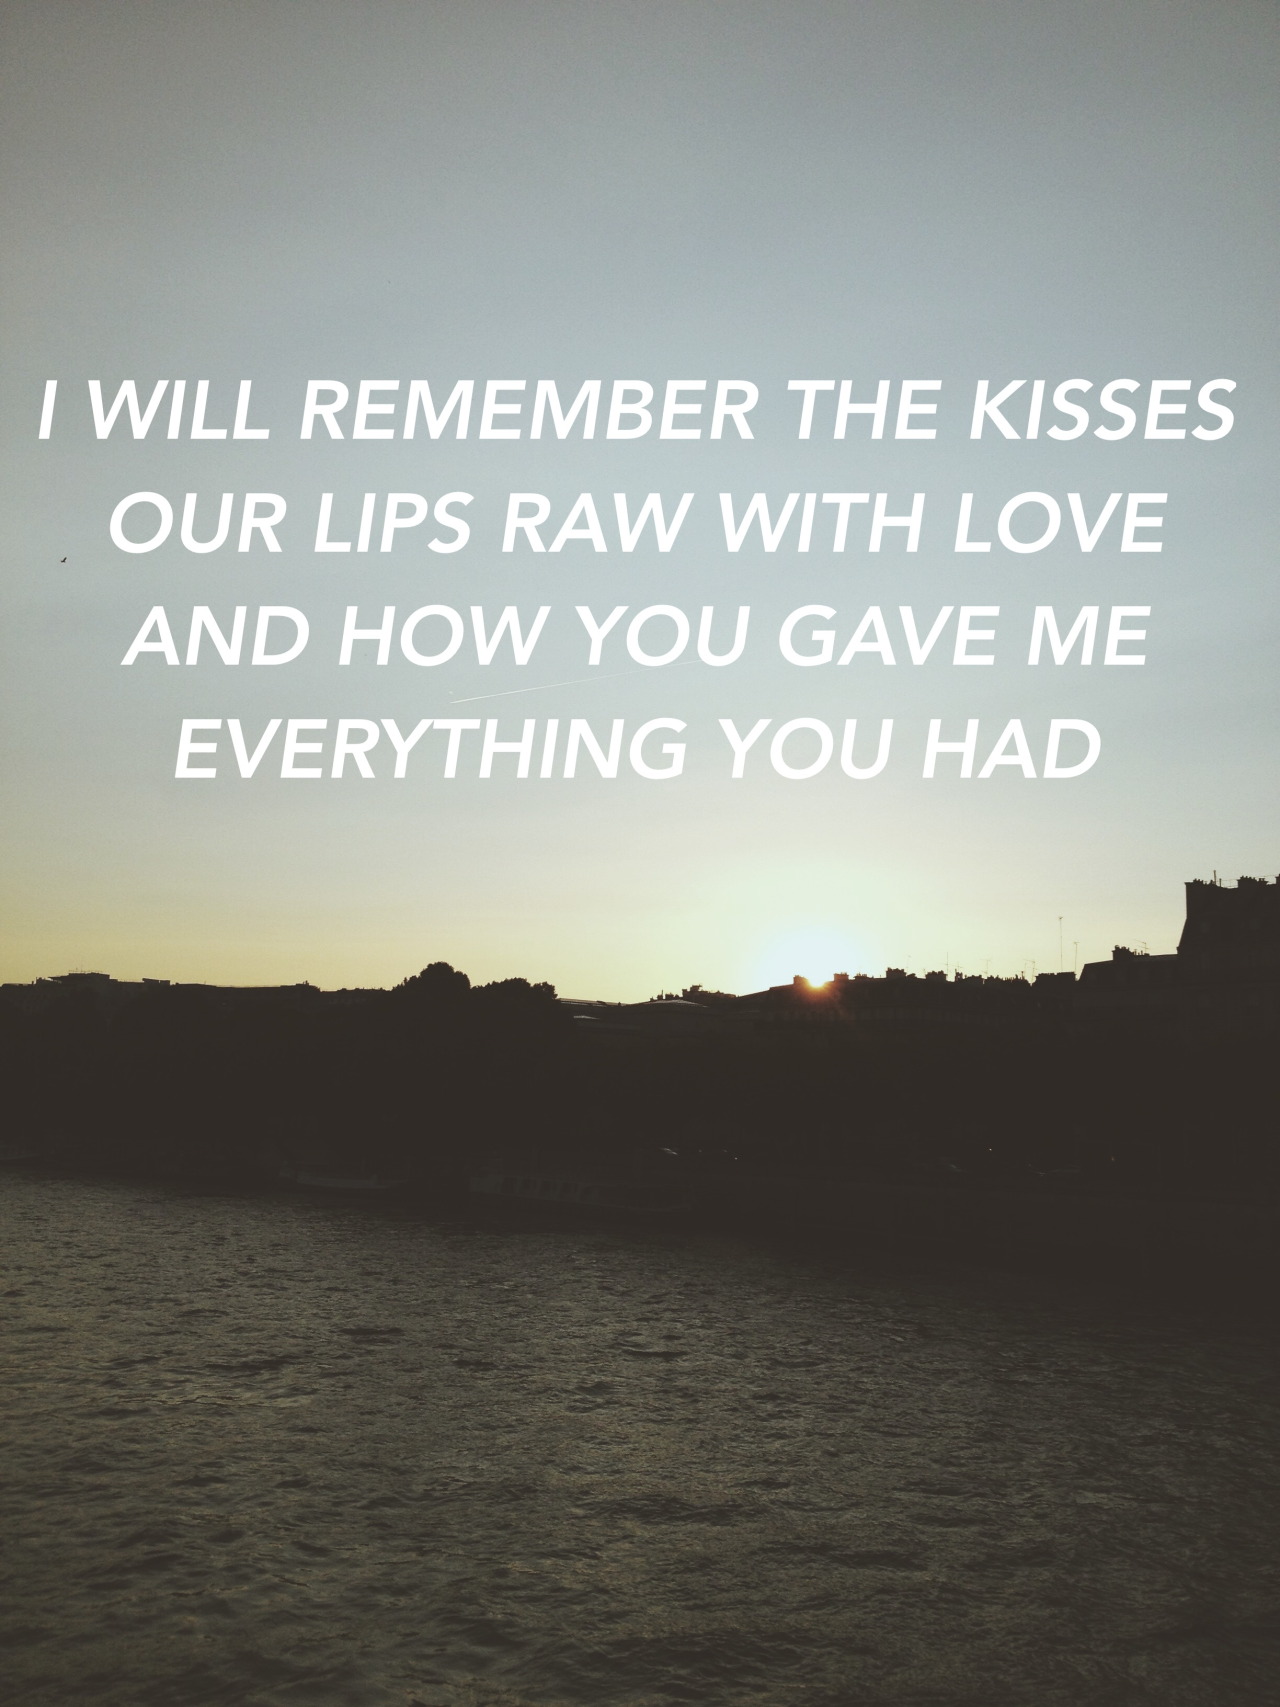 charles bukowski bukowski quotes quotes bukowski love kisses passion you remember memories sad story life text beauty